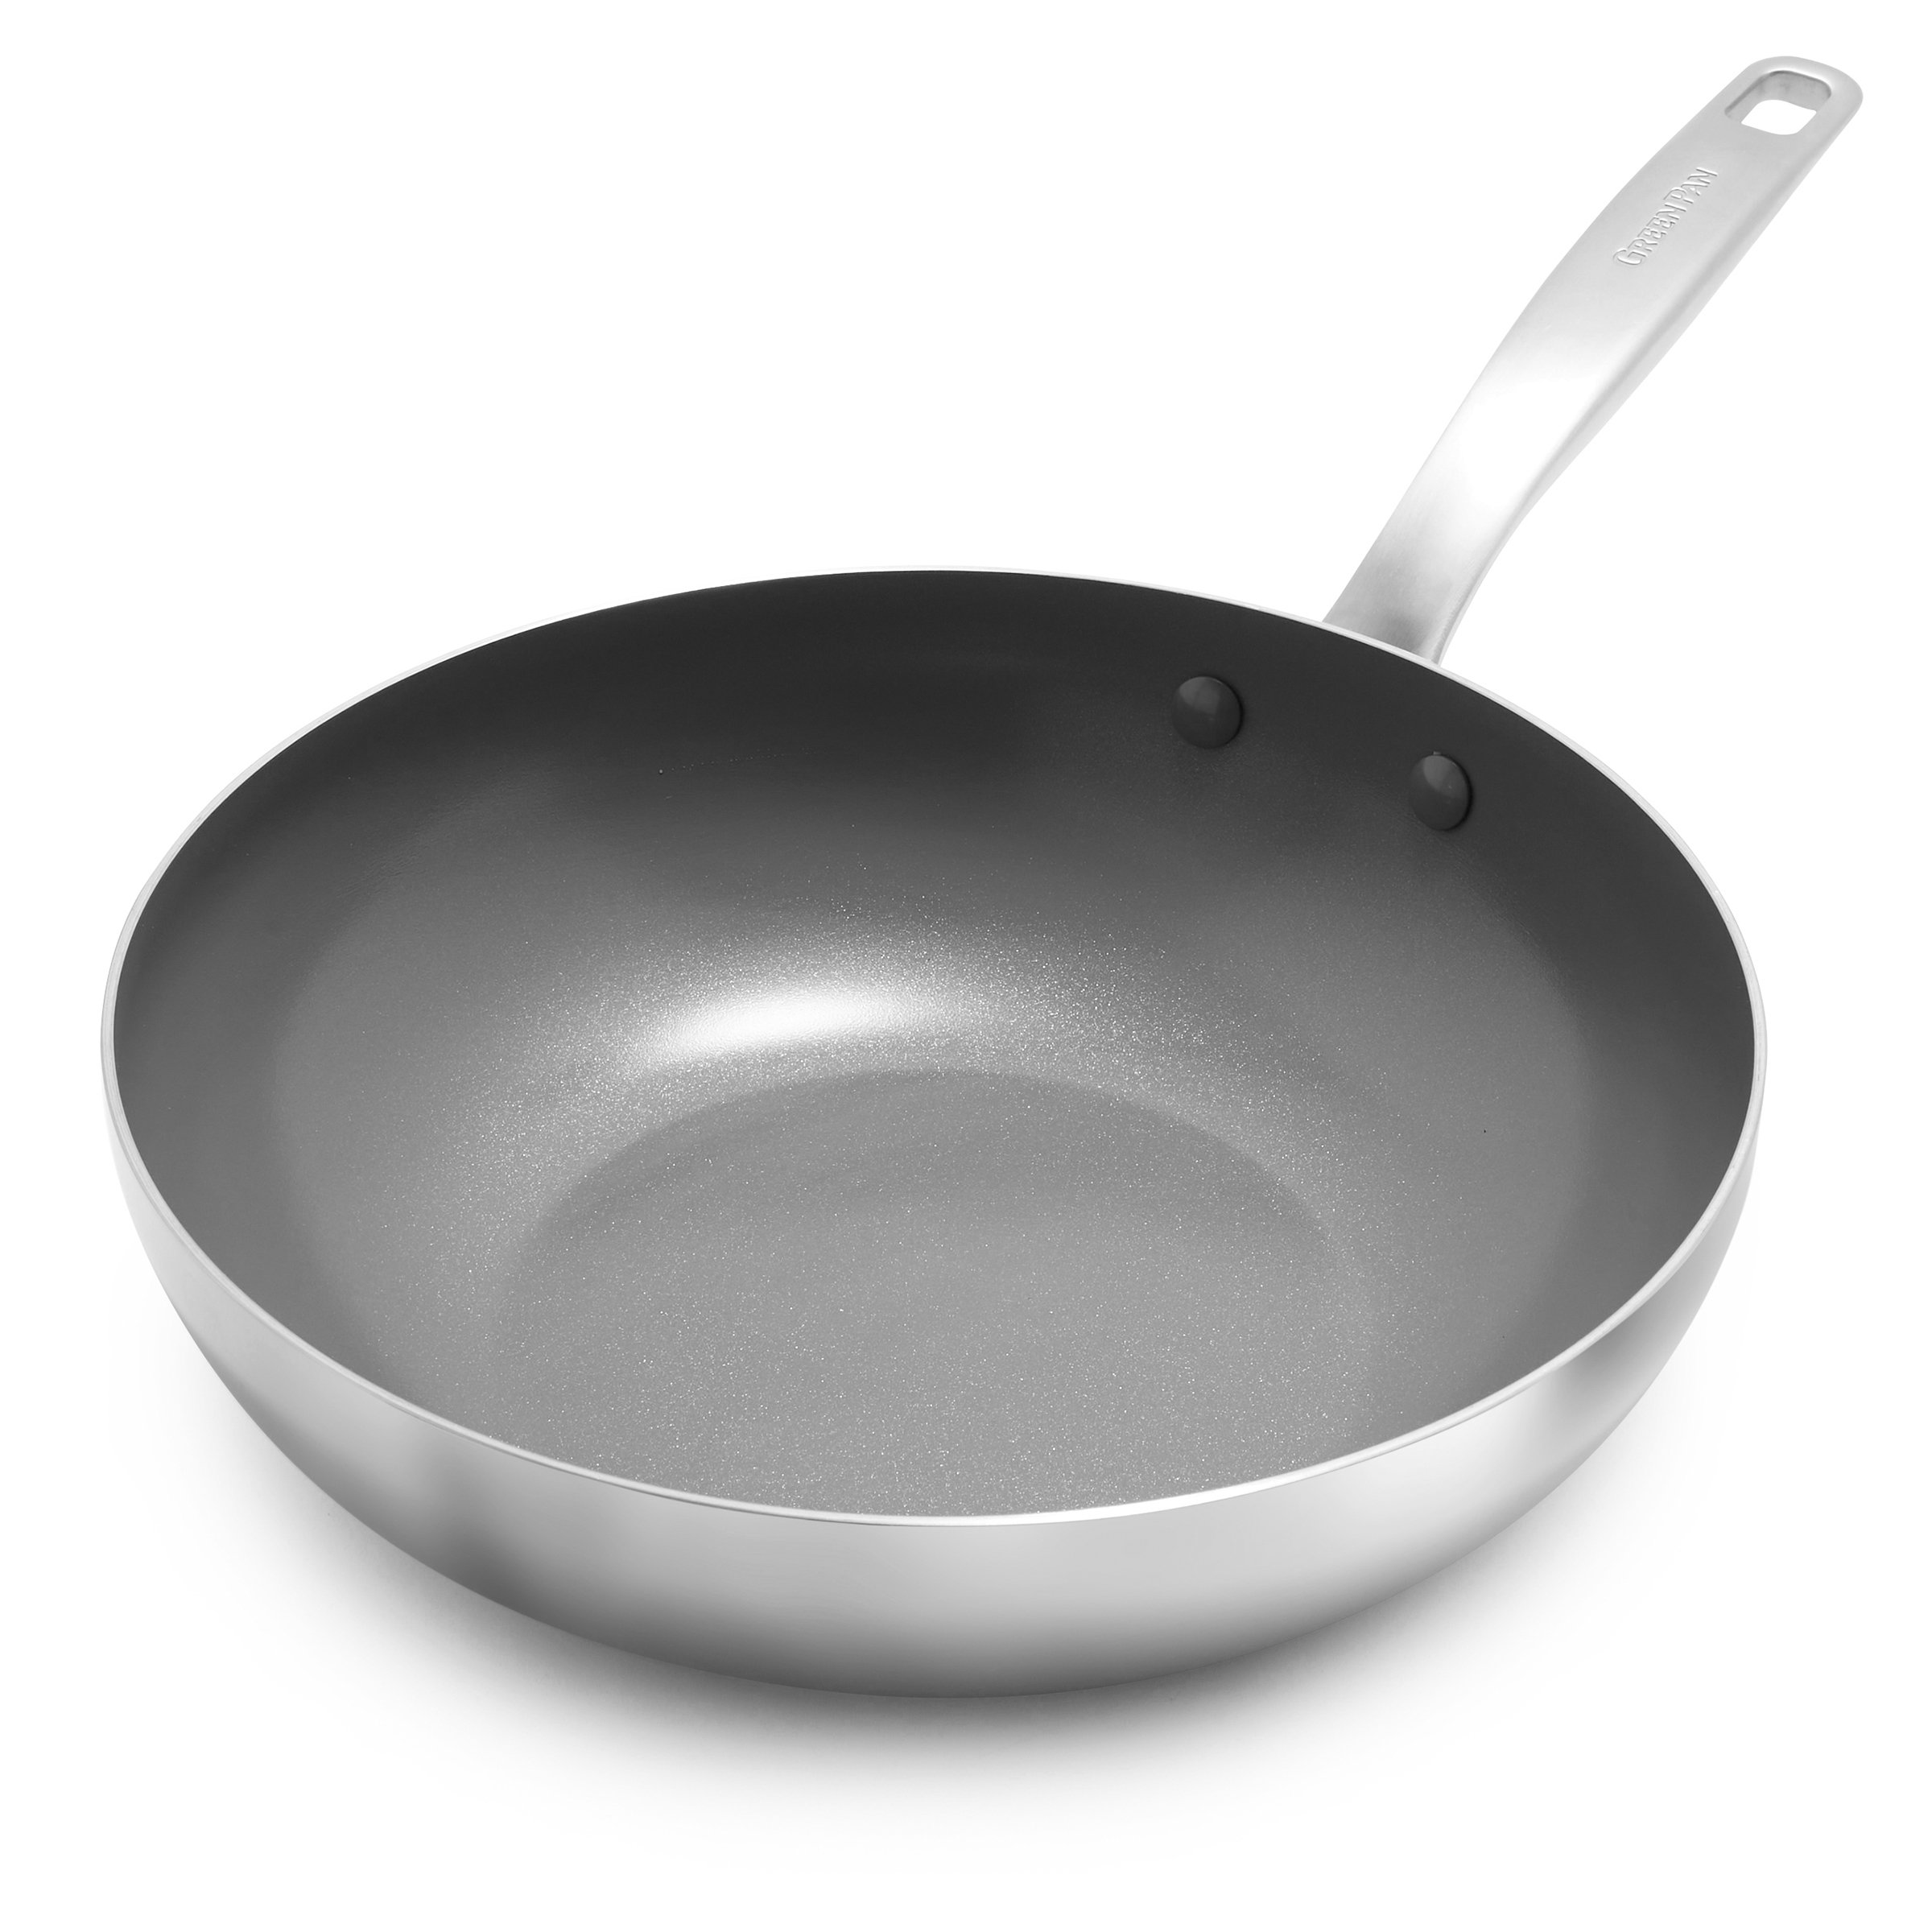 GreenPan Ceramic 12-inch Nonstick Frying Pan, Oven Safe Gray & GreenPan  Ceramic 5-inch Nonstick Egg Pan, Black